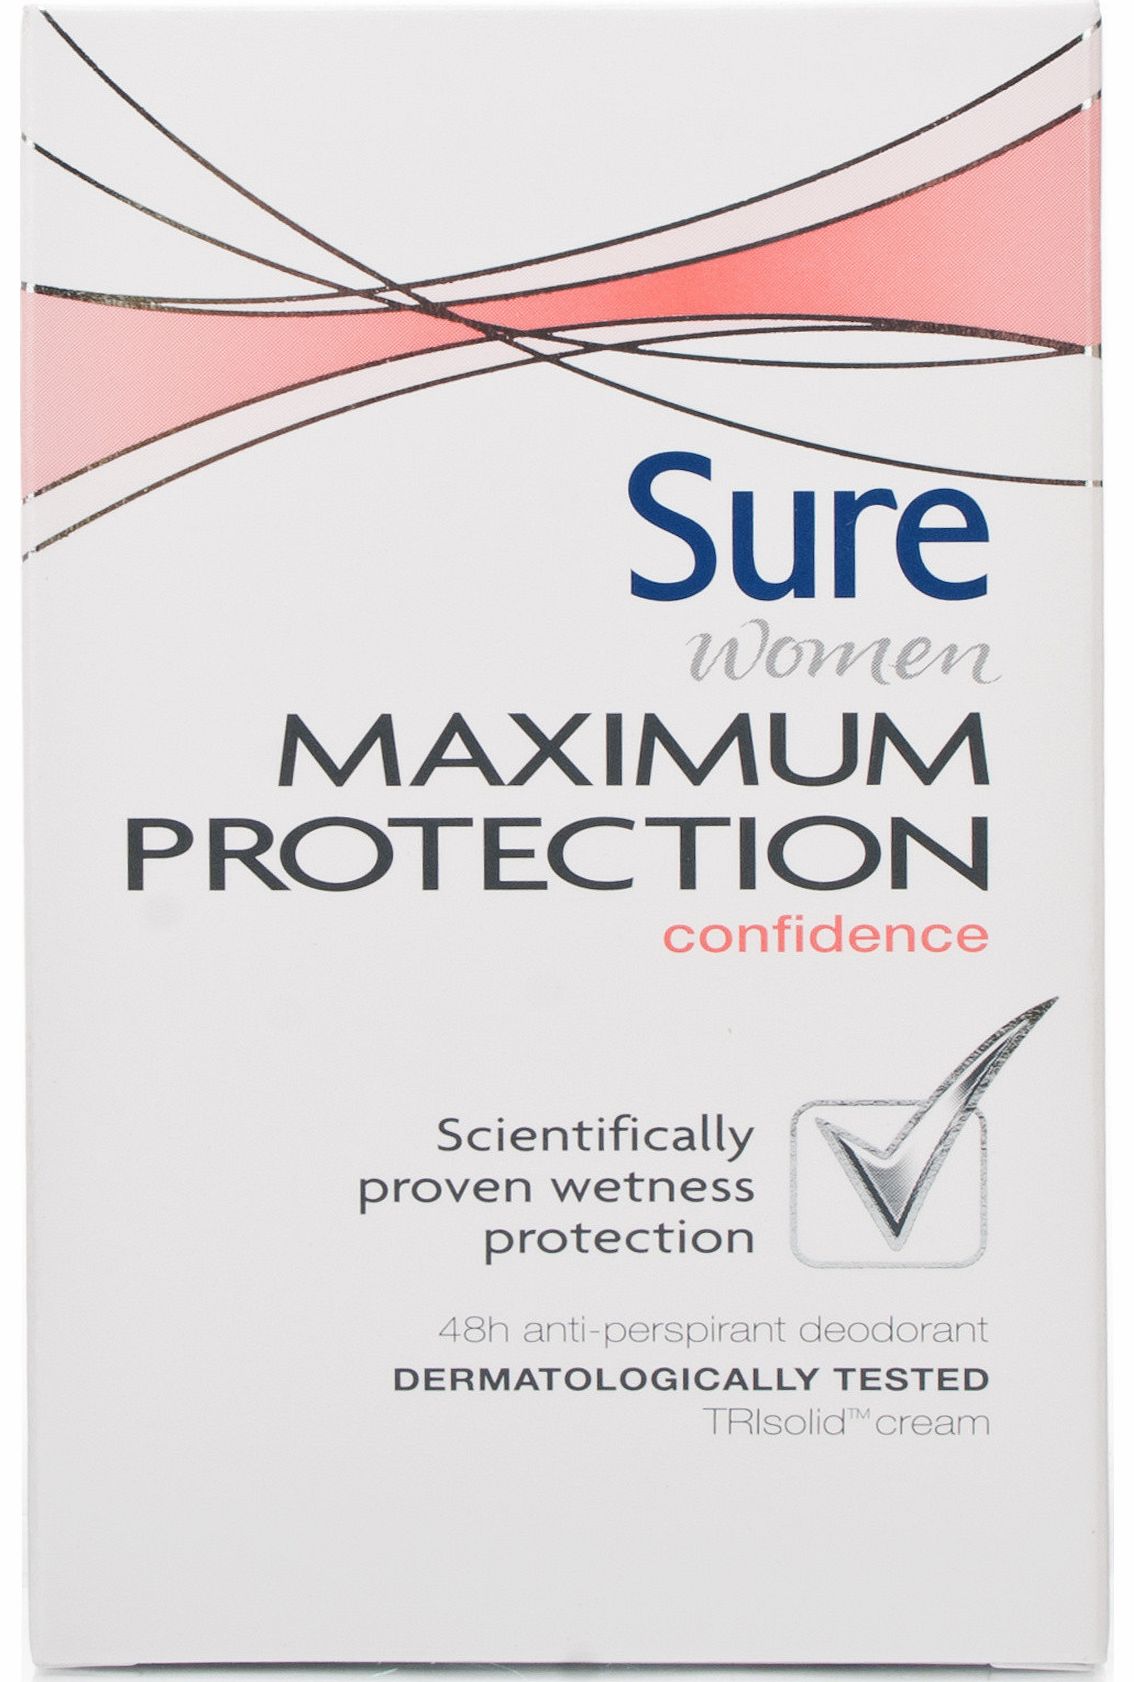 Women Maximum Protection Confidence